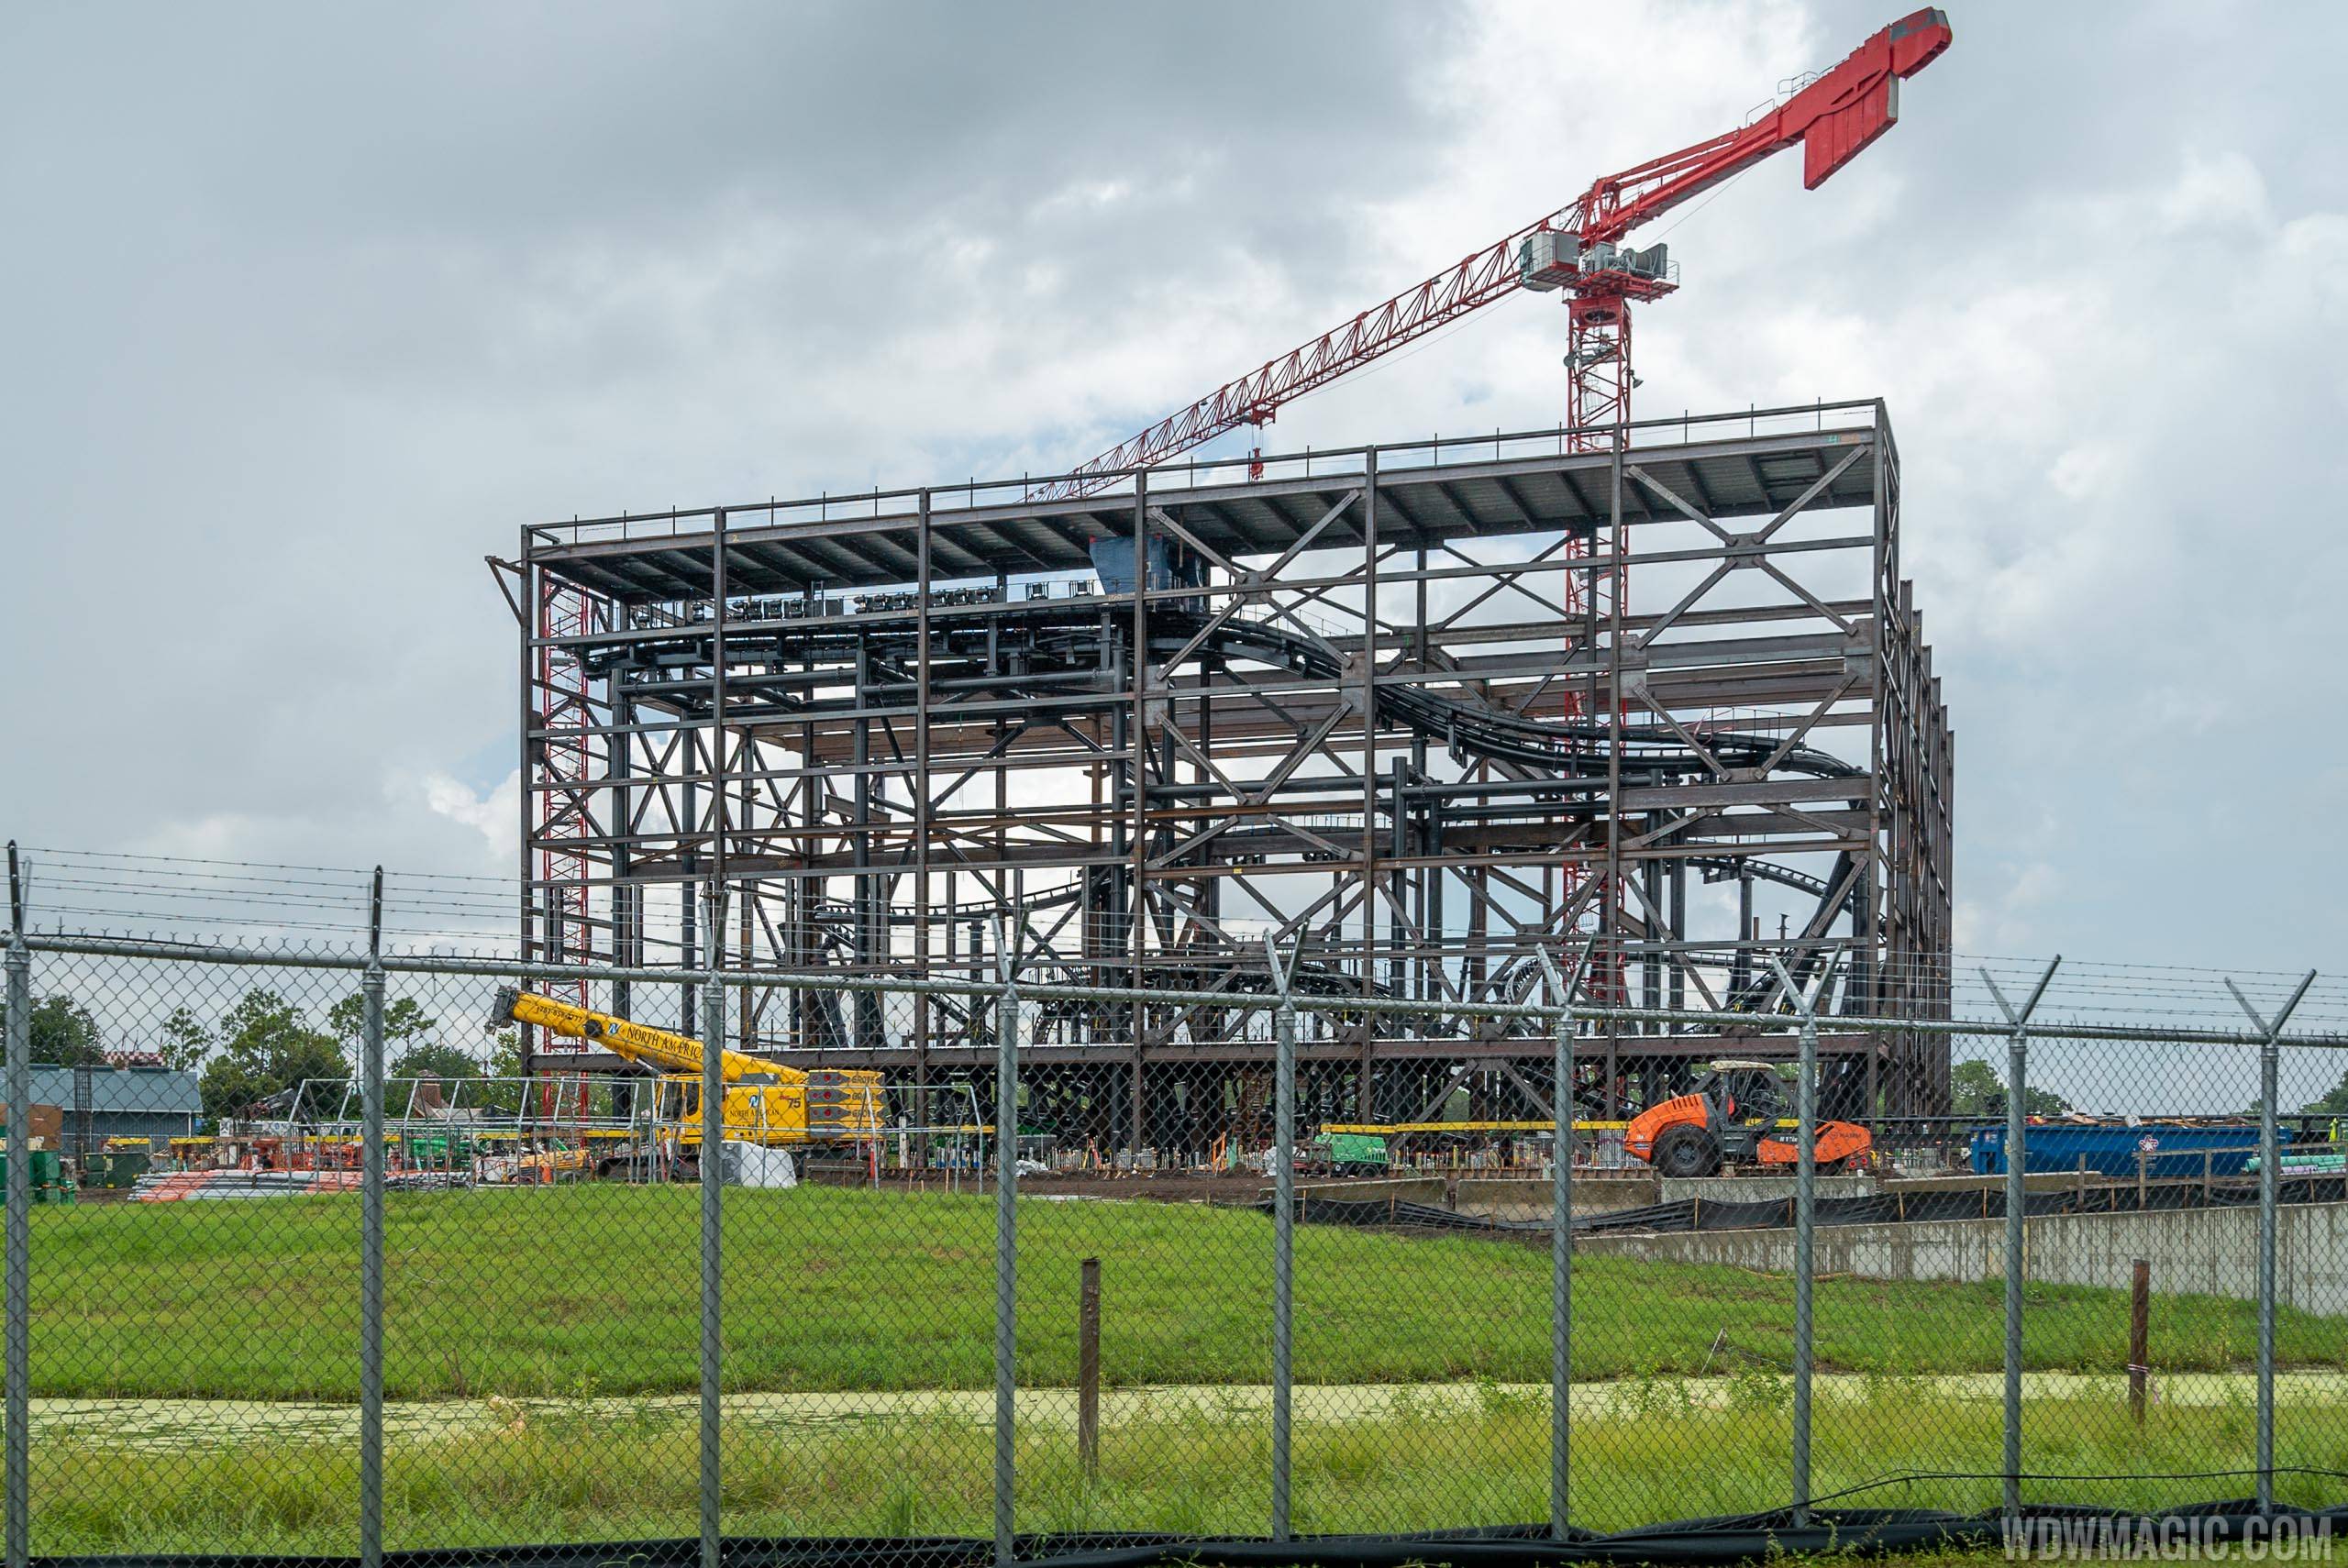 TRON Lightcyle Run construction site - August 2019